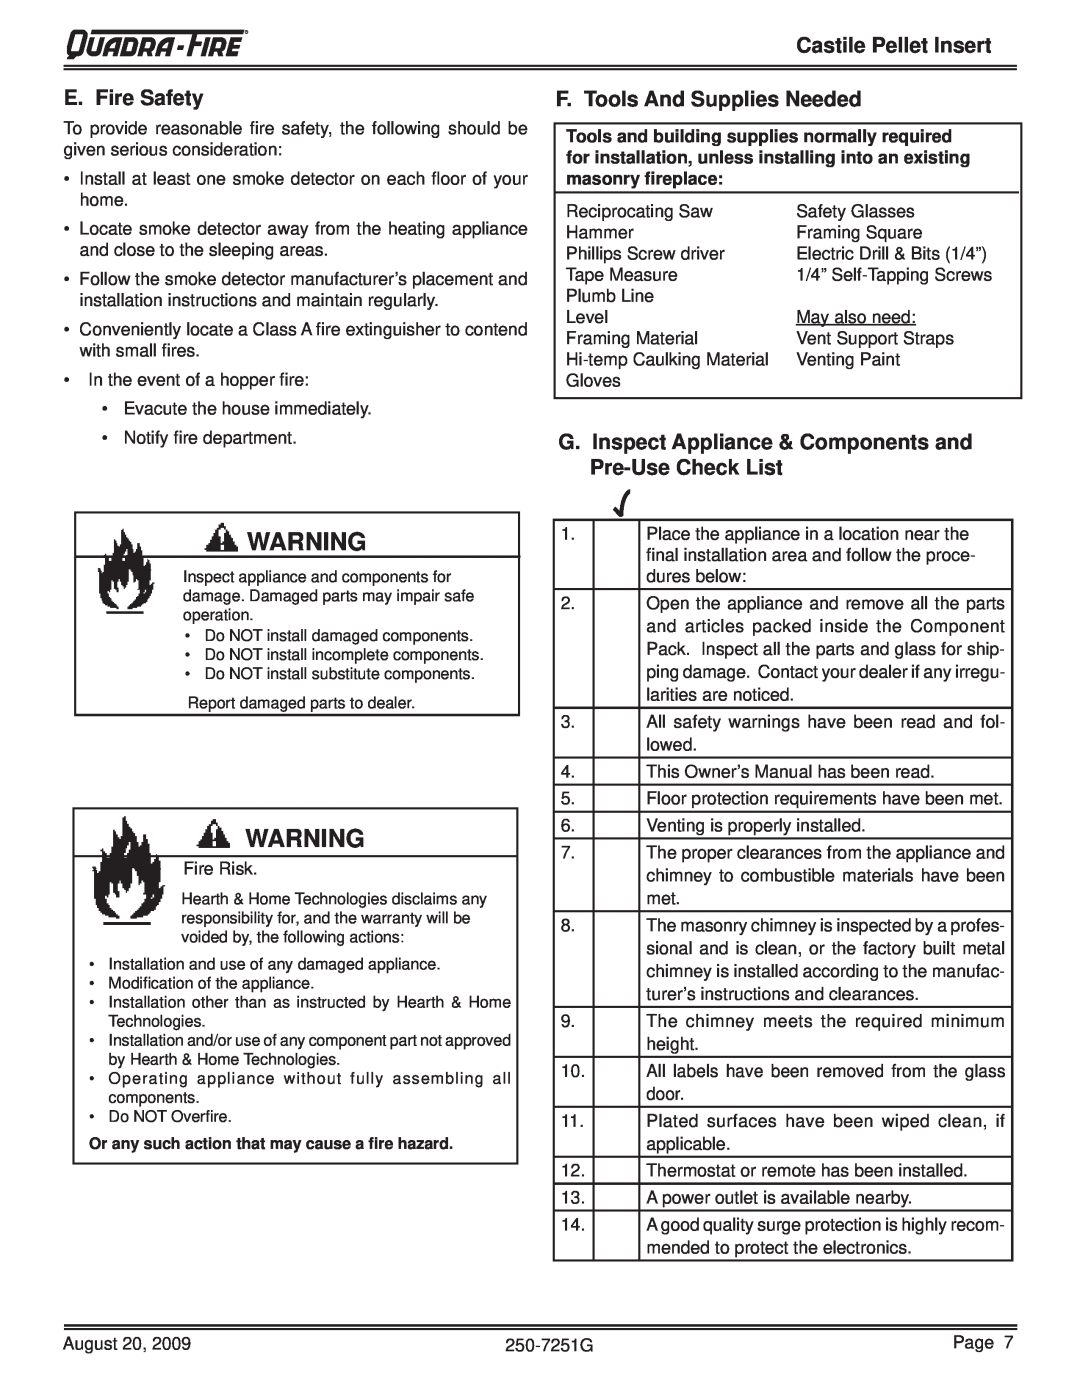 Quadra-Fire CASTINS-CWL, 810-03201, CASTINS-CSB E. Fire Safety, F. Tools And Supplies Needed, Castile Pellet Insert 